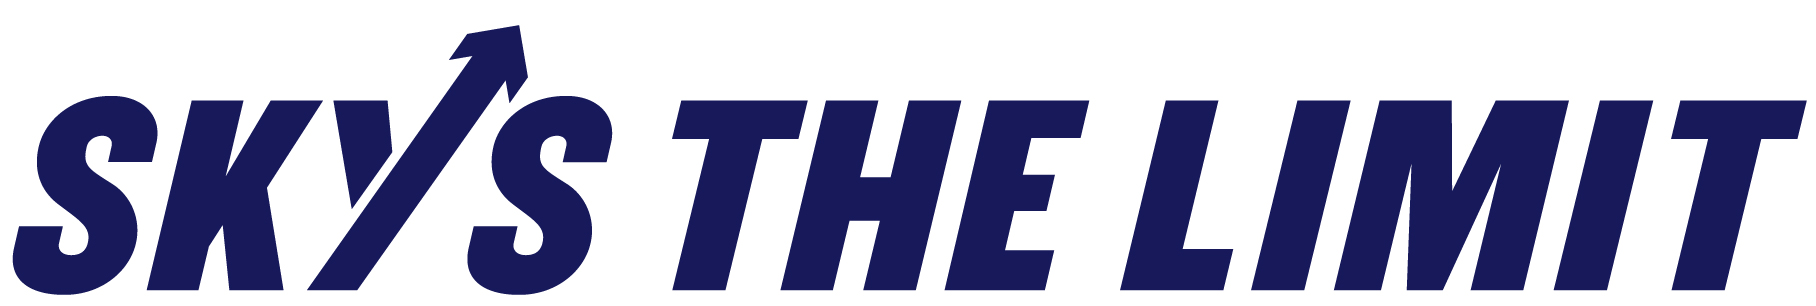 Skythelimit logo